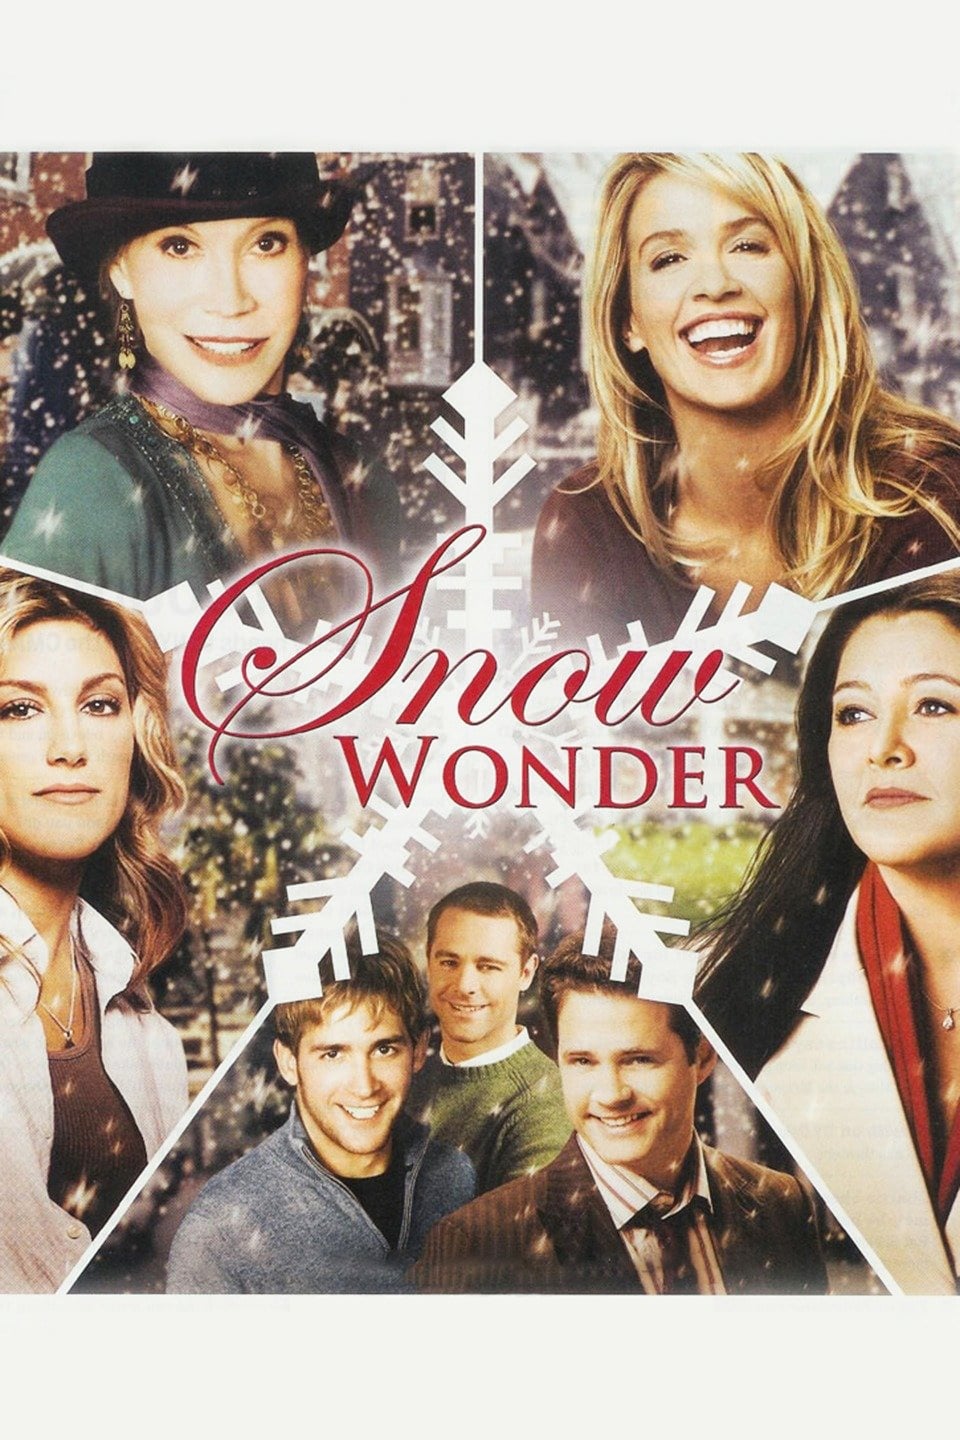 Snow Wonder (2005)